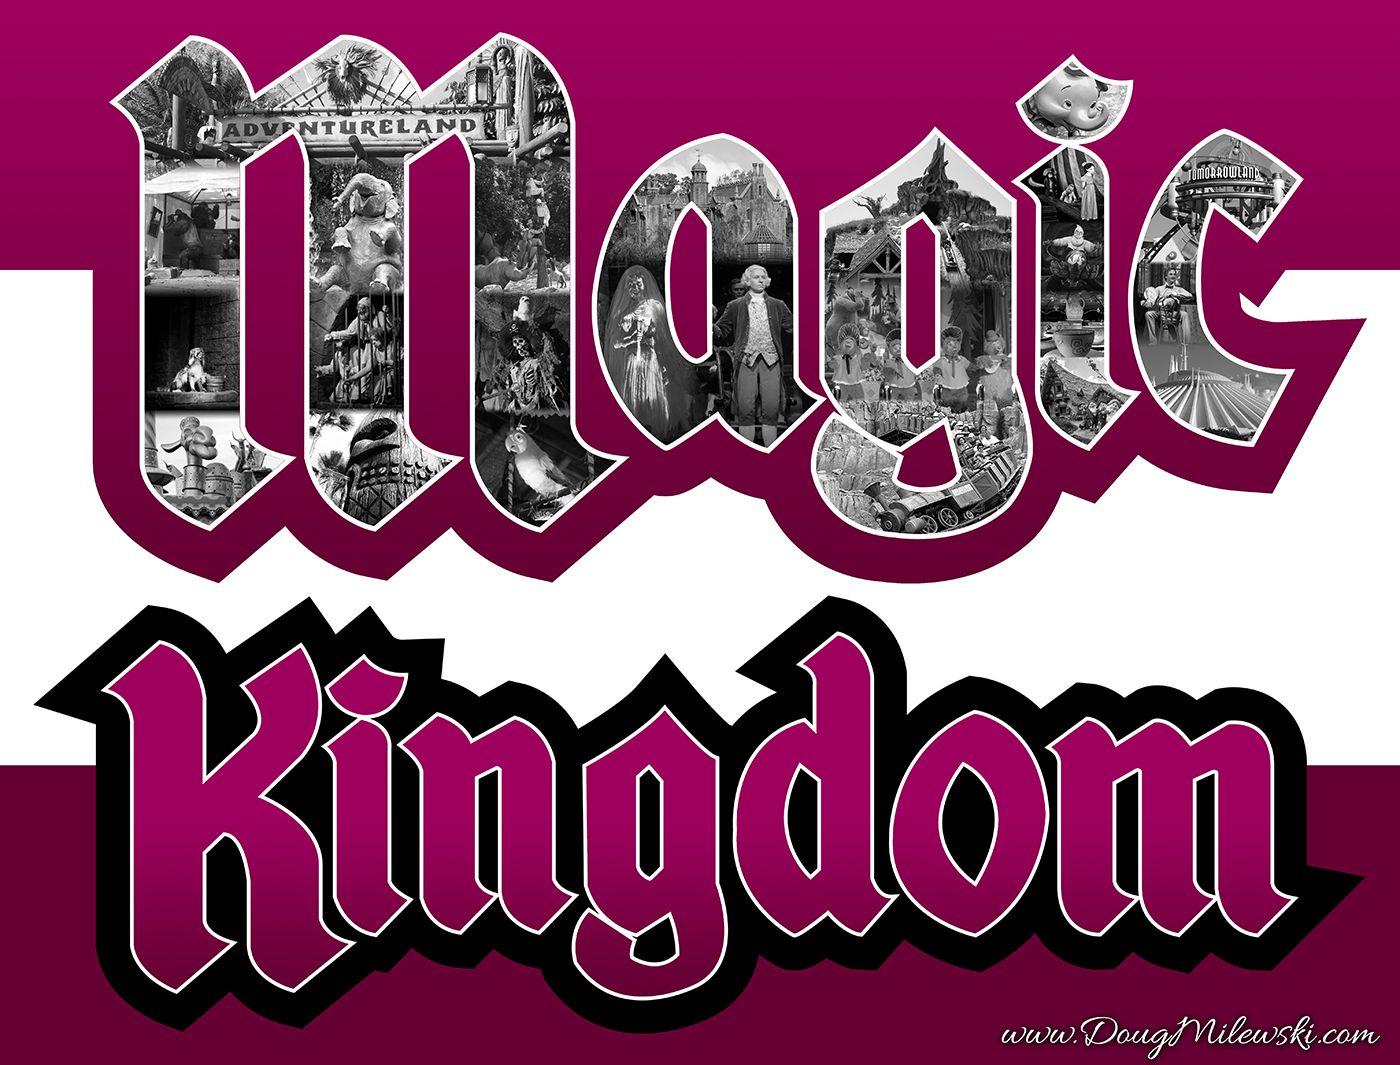 magic kingdom disney world logo